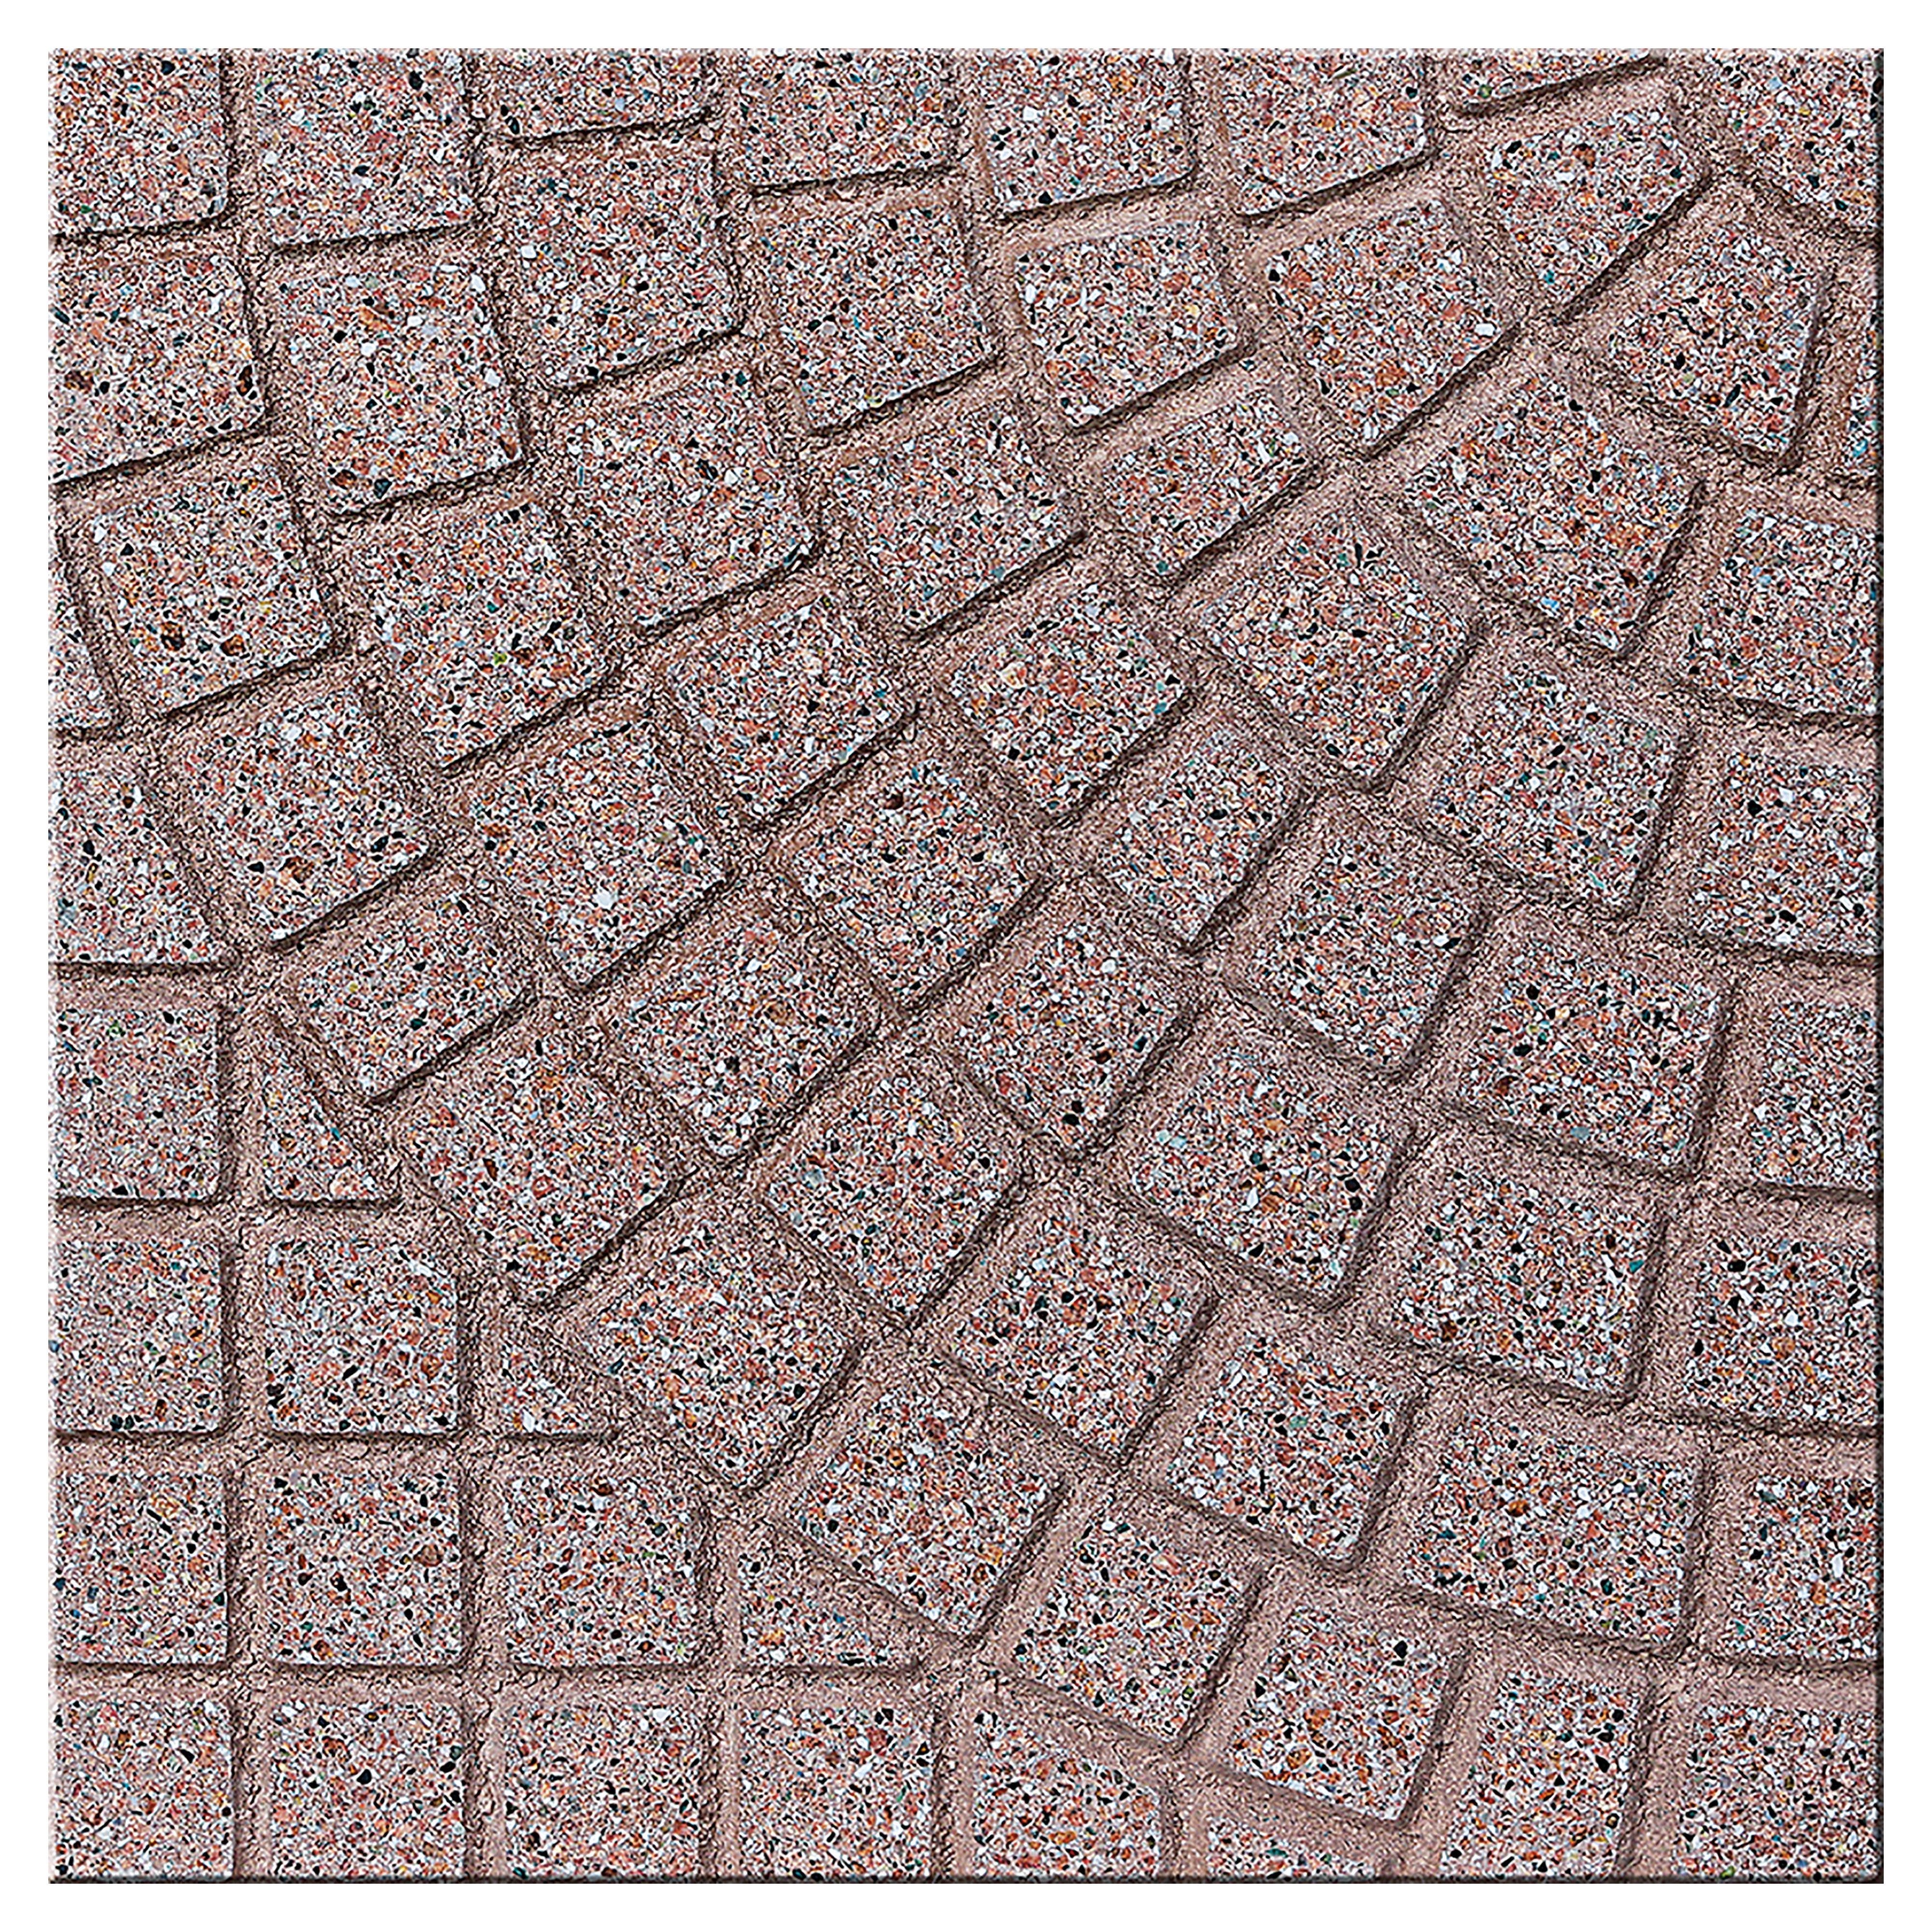 TECNOMAT Outdoor flooring